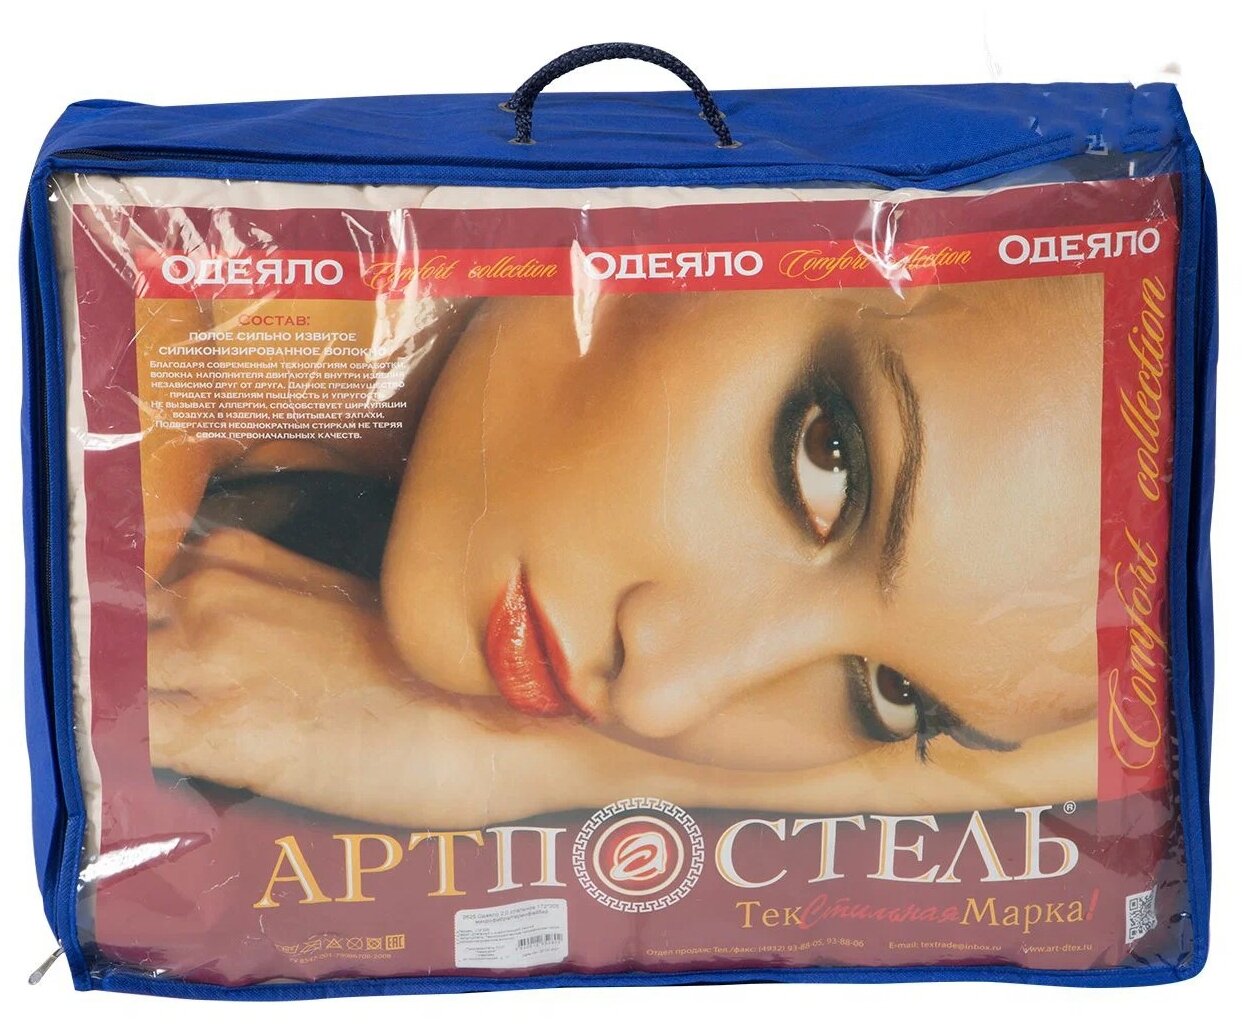 Одеяло евро (200x215), АртПостель "Comfort" (Комфорт), п/э волокно, арт. 2626, теплое - фотография № 5